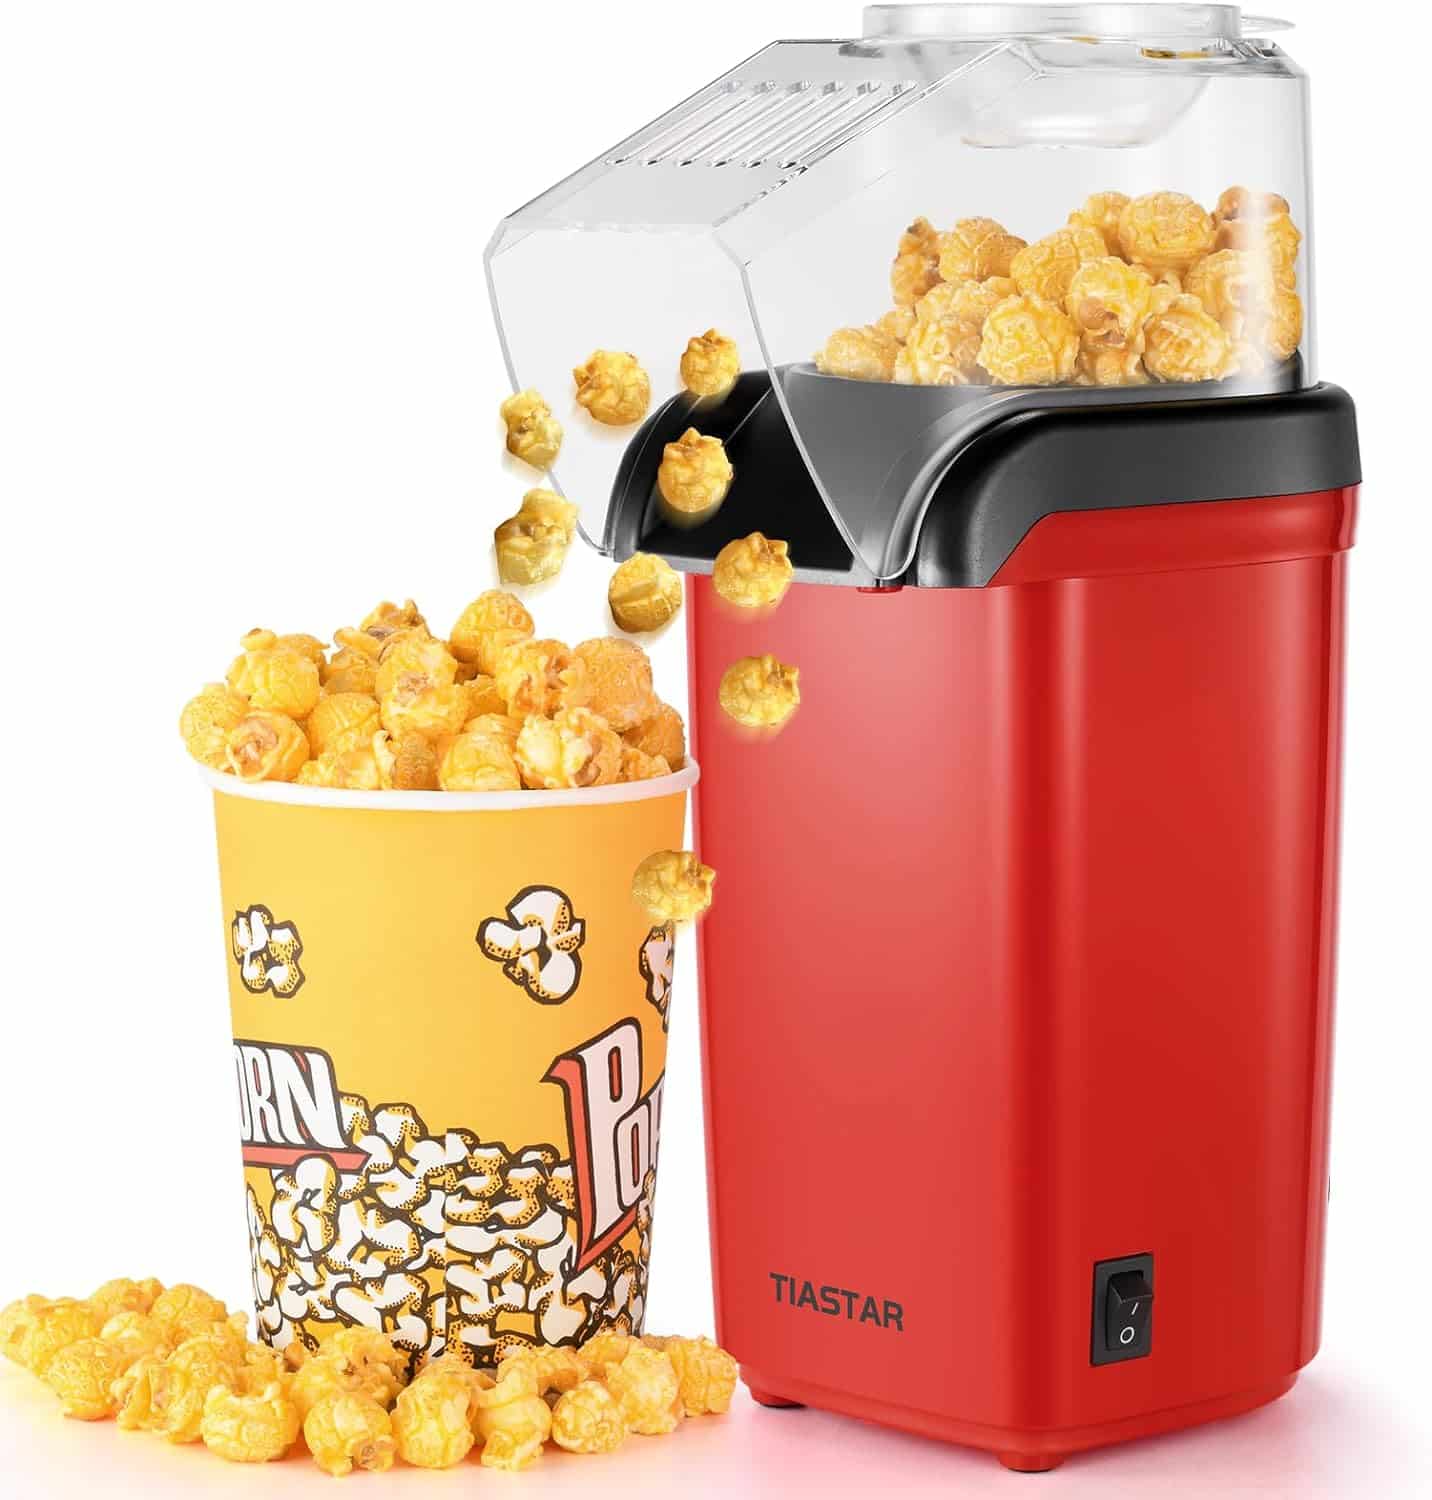 Tiastar Popcorn Maker, 1200W Hot Air Popcorn Machine, Electric Popcorn Maker 0651